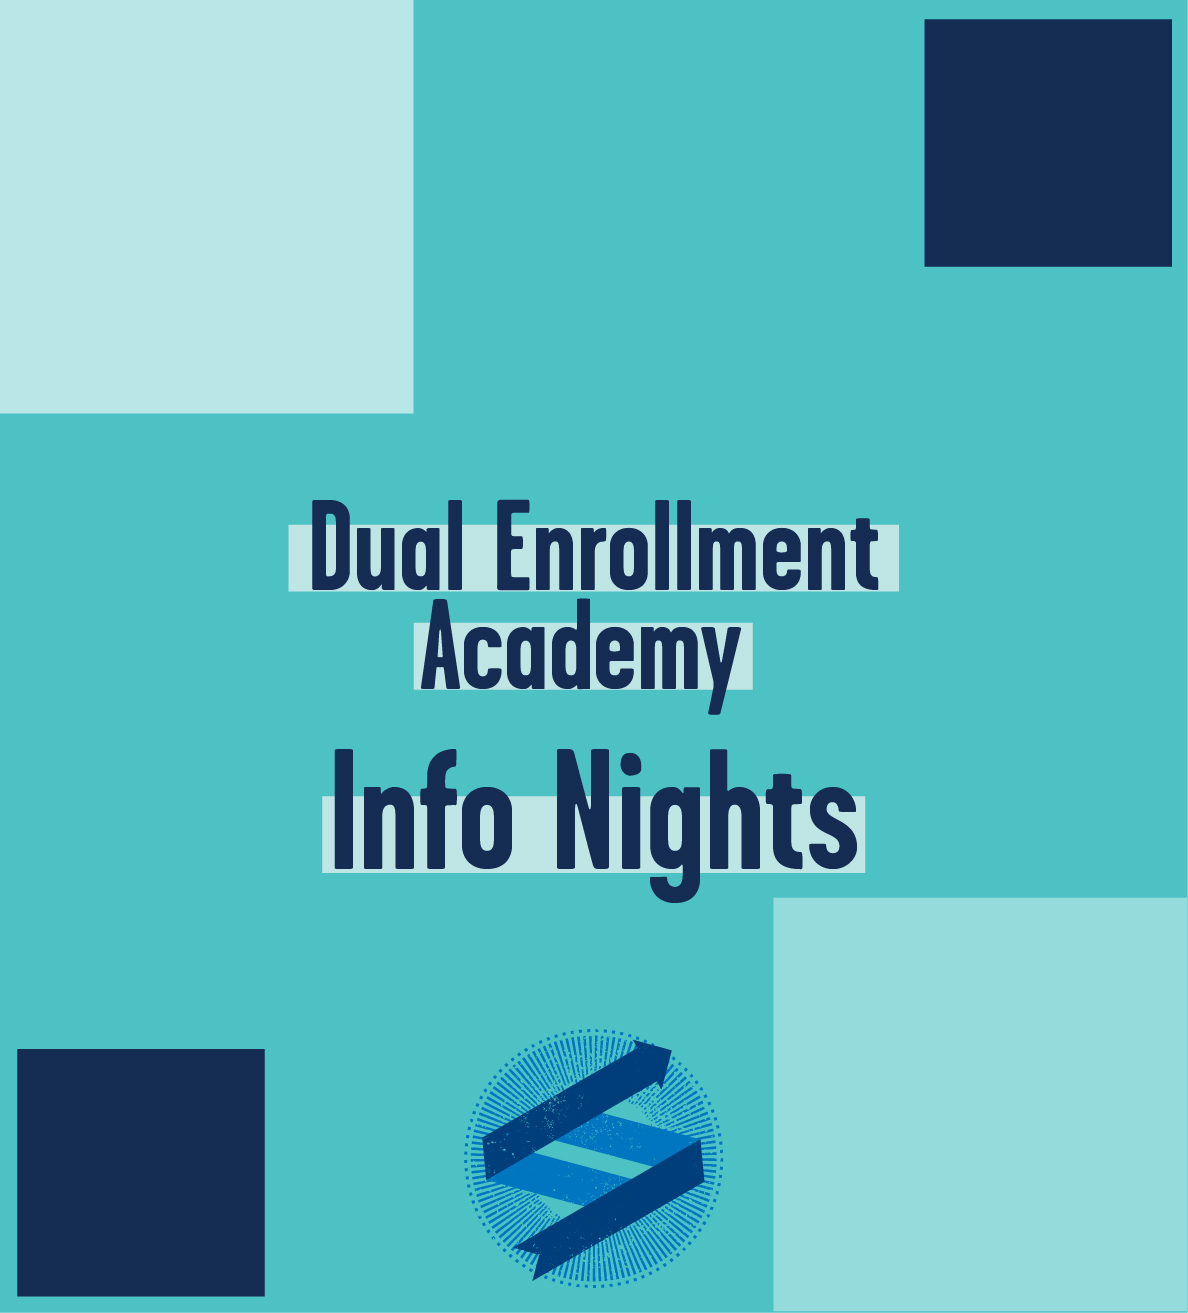 Dual Enrollment Academy Info Night